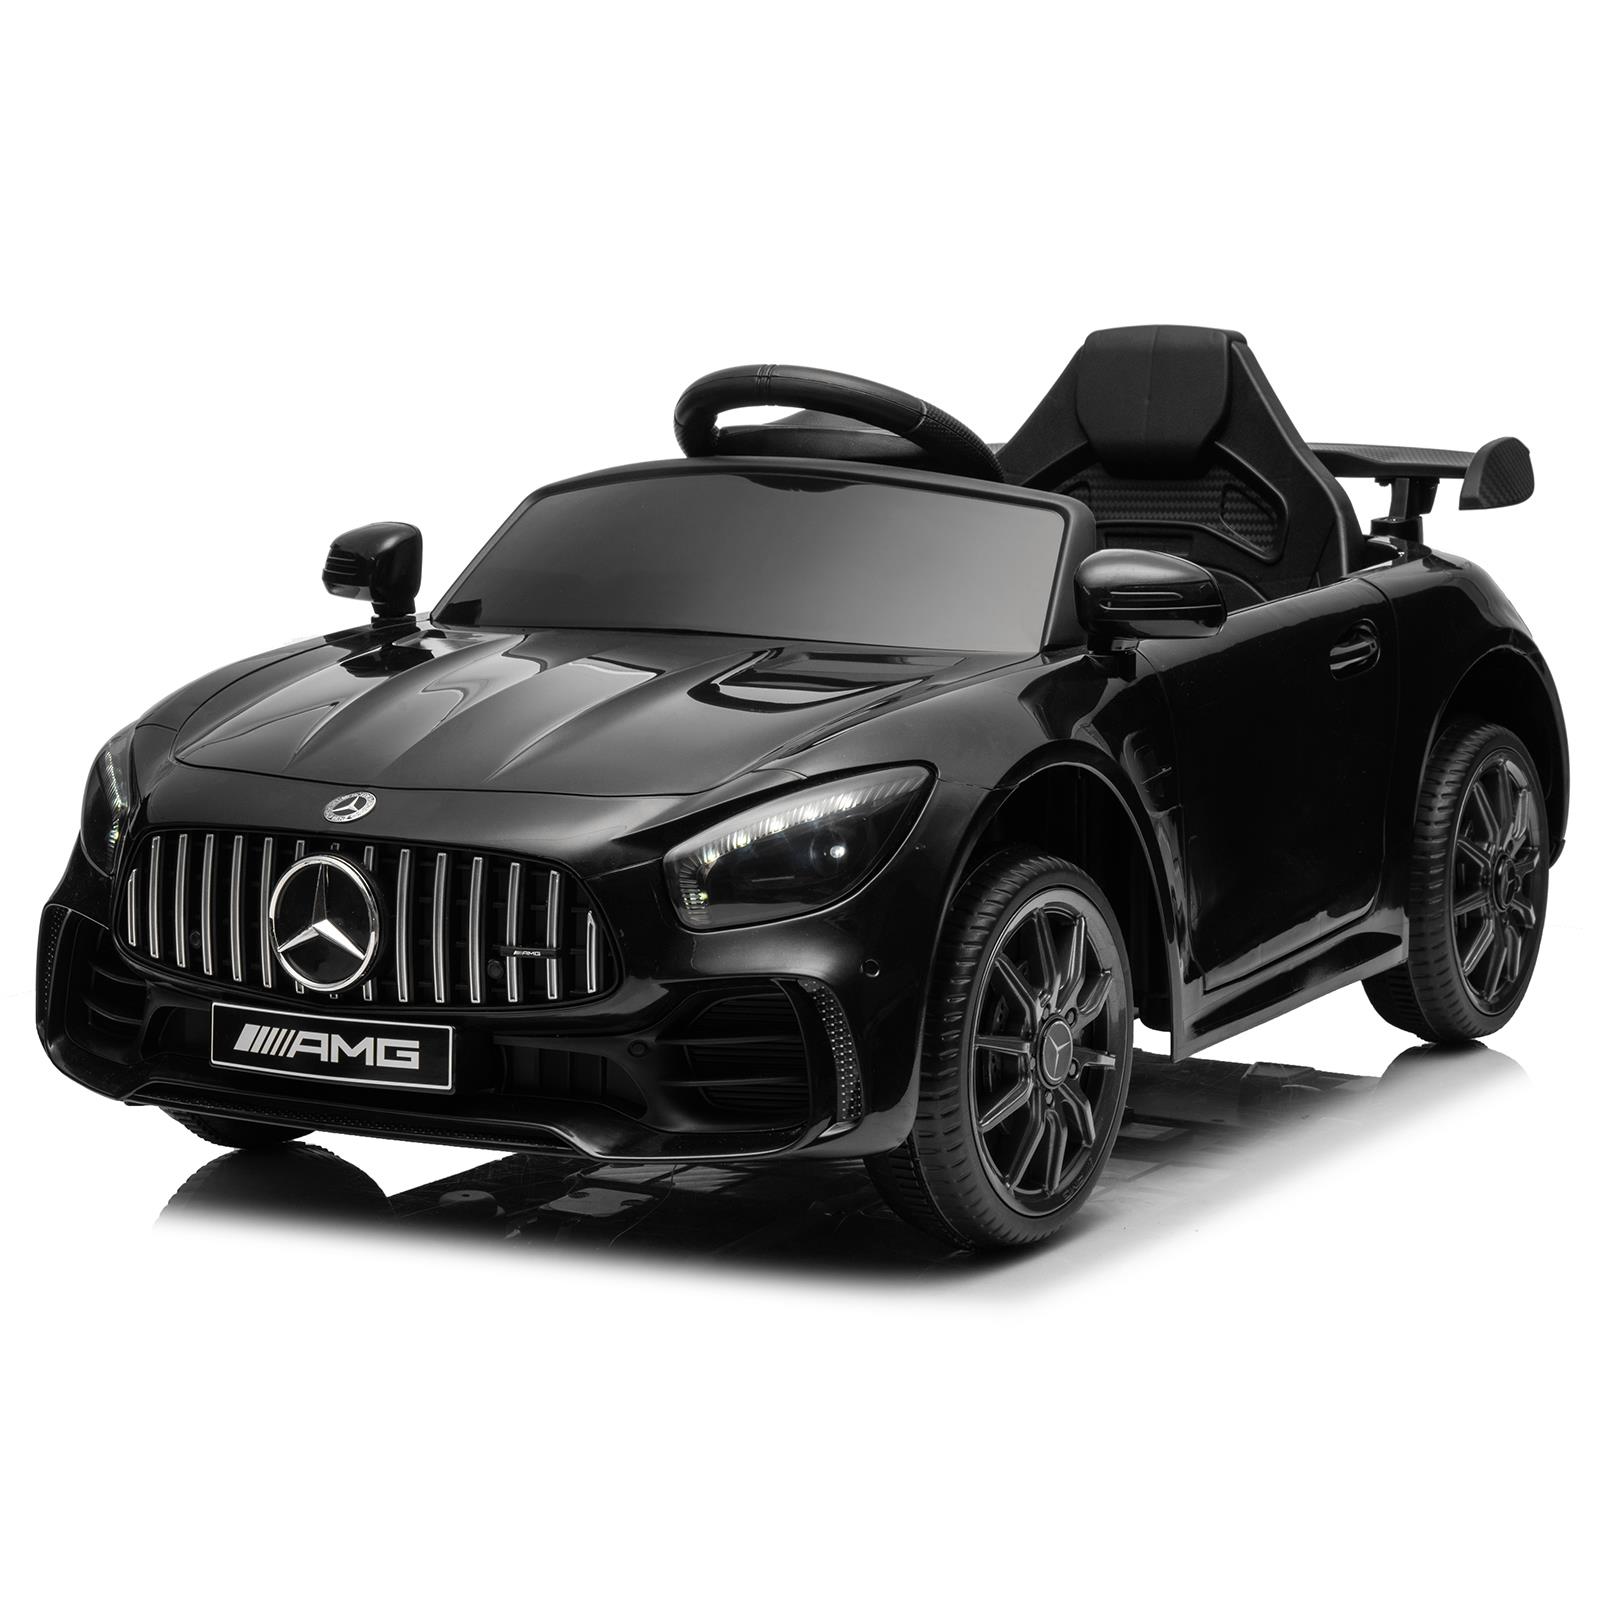 UBesGoo 12V Licensed Mercedes-Benz Electric Ride on Car Toy for Toddler Kid w/ Remote Control, LED Lights, Black - image 1 of 11